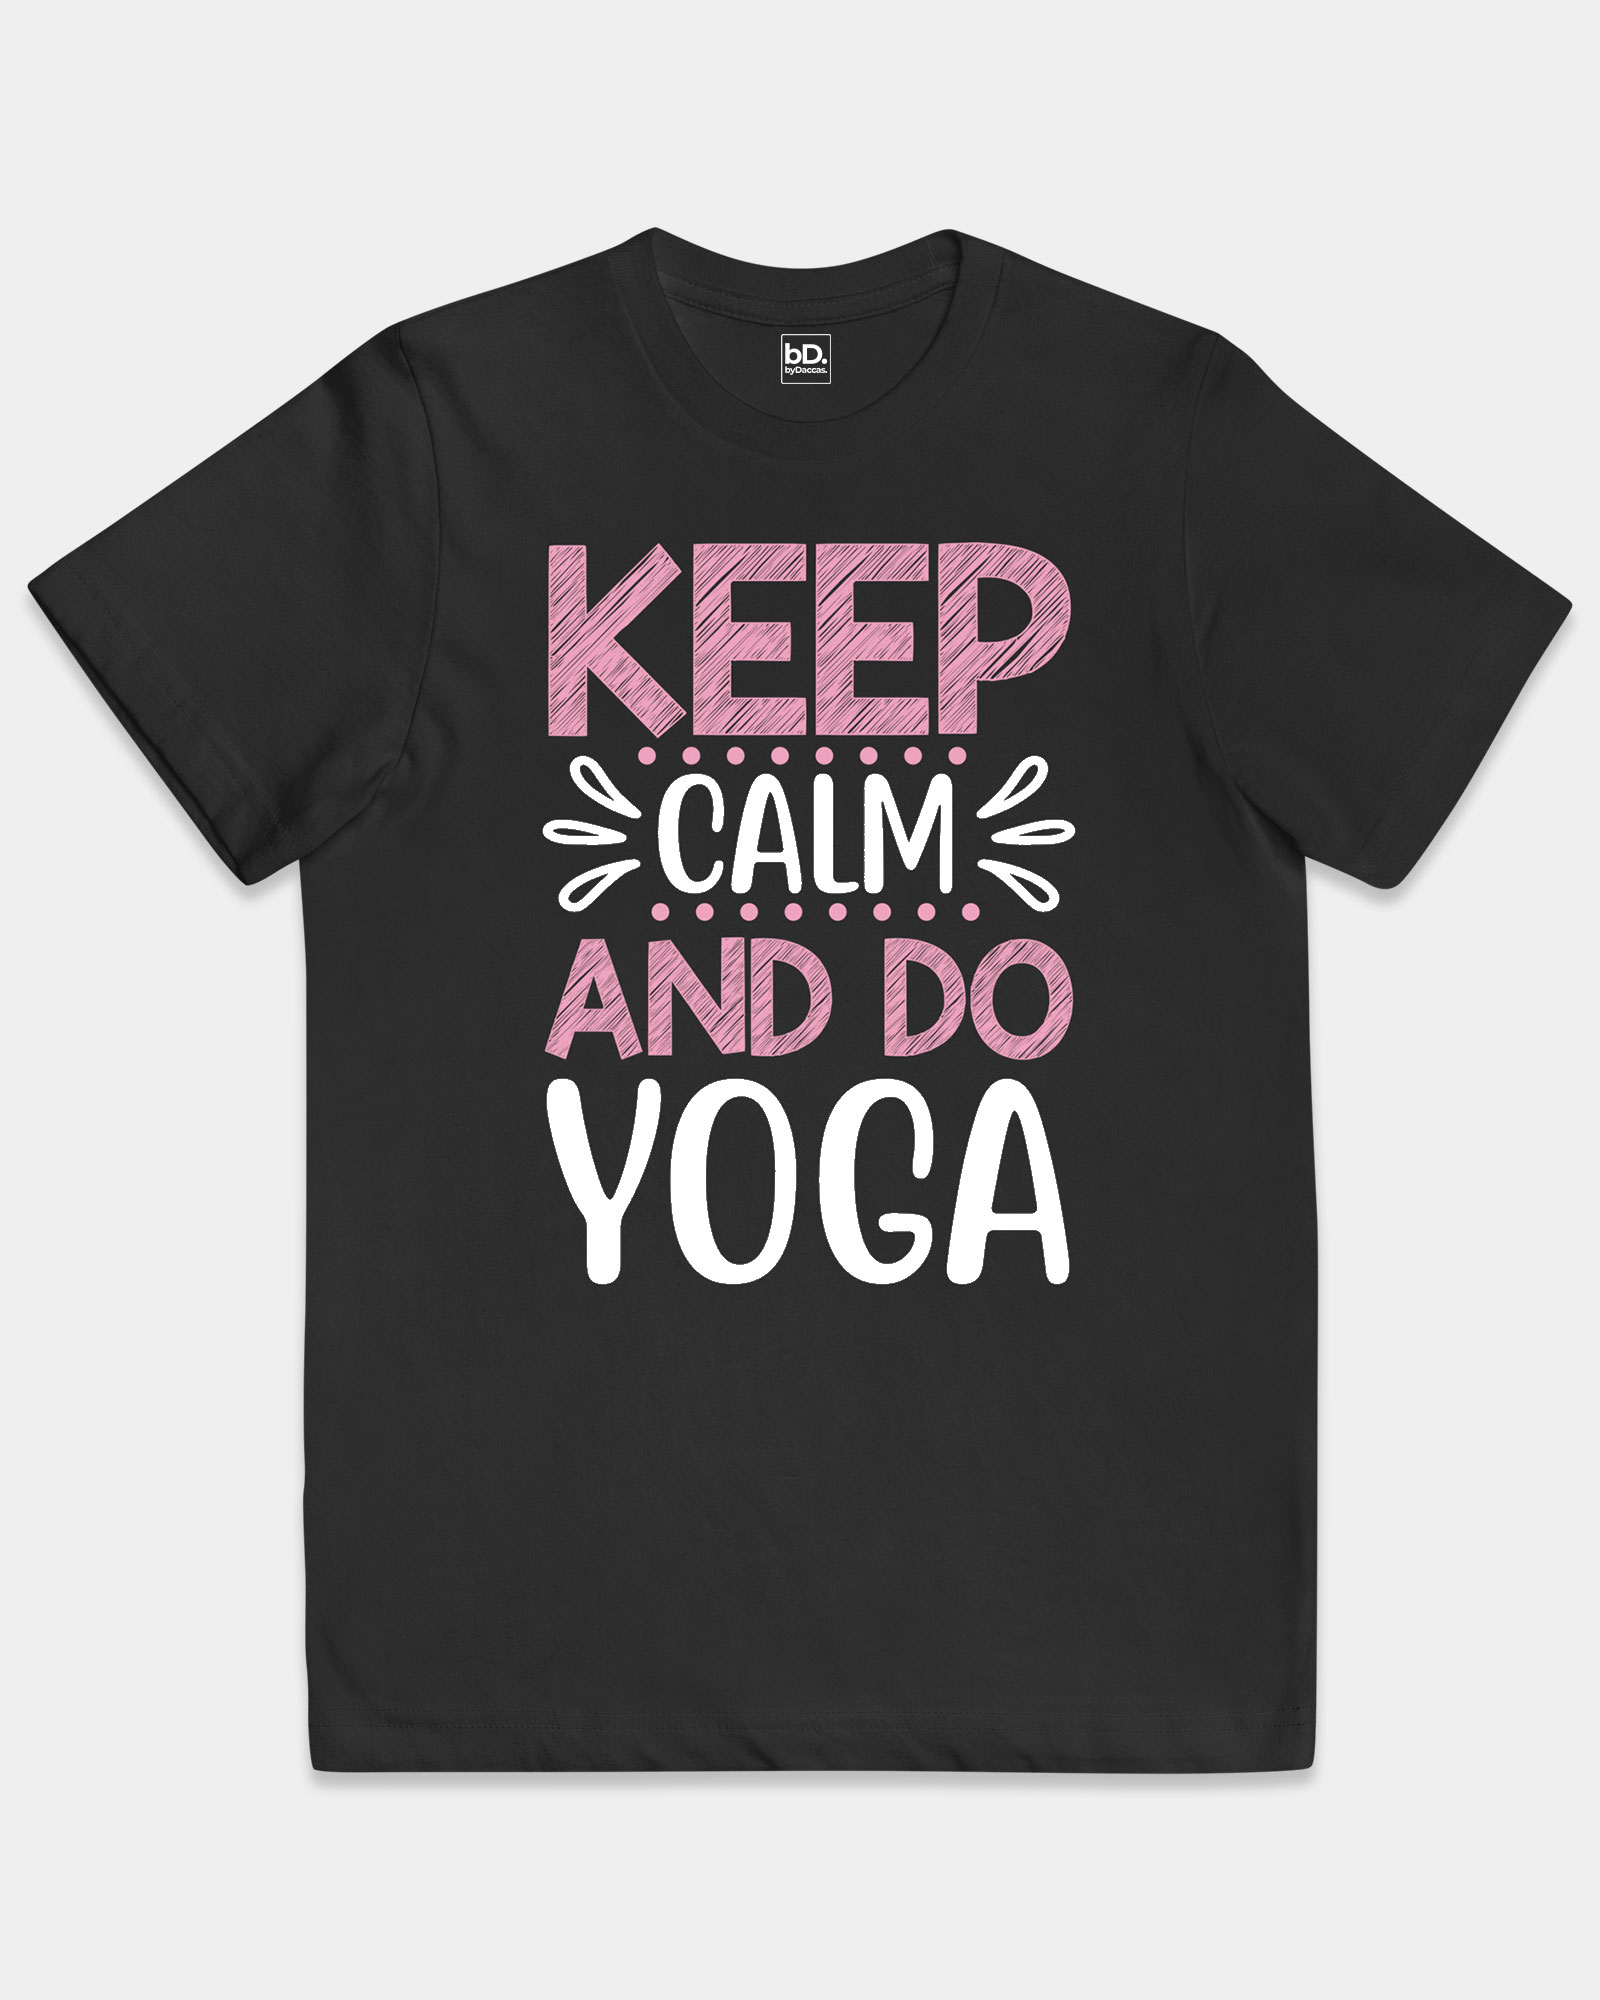 Keep calm and do yoga tshirt